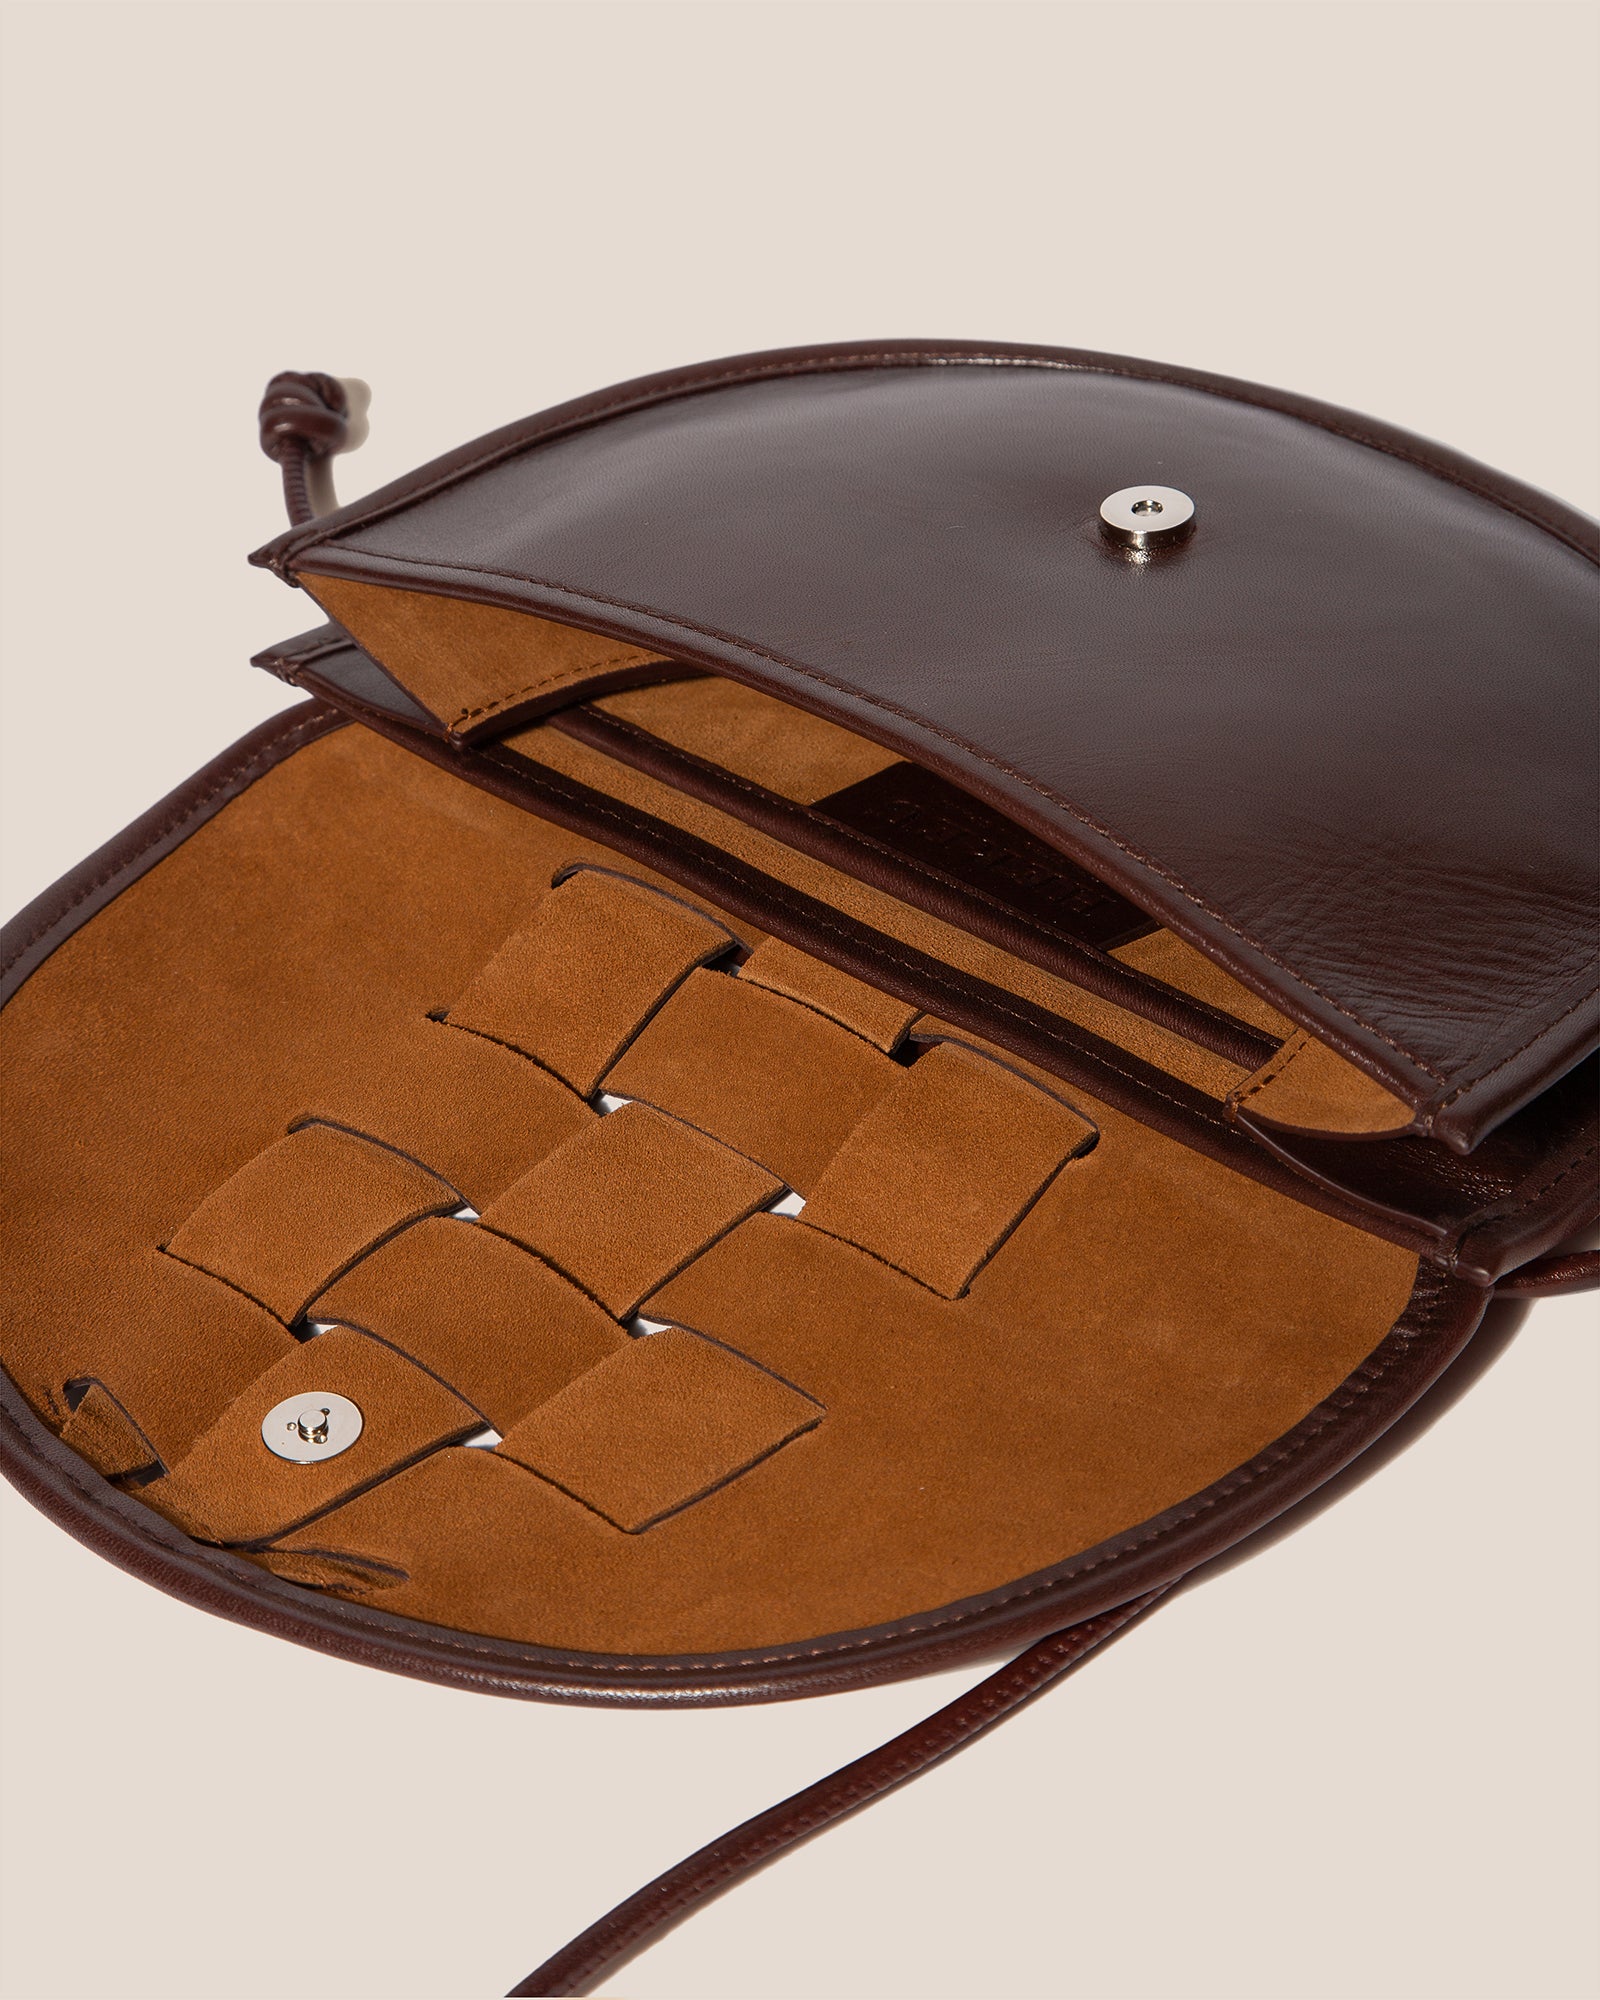 Shop HEREU 2WAY Leather Crossbody Handbags (1523927) by Phalaenopsis